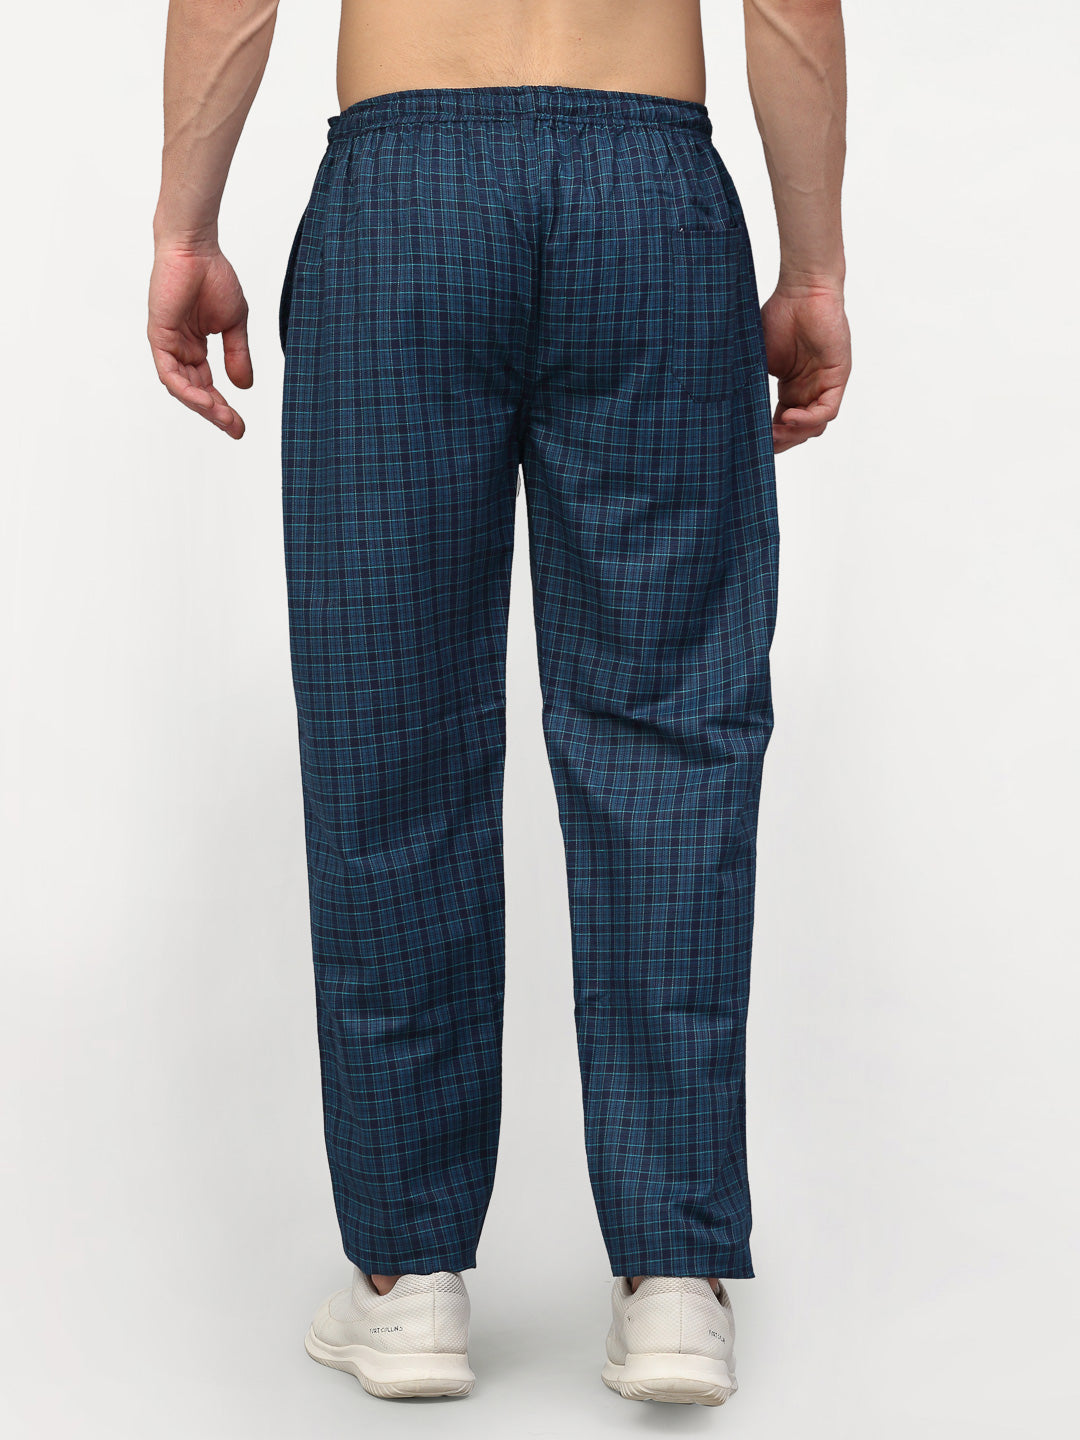 Men's Blue Cotton Checked Track Pants ( JOG 017Blue ) - Jainish